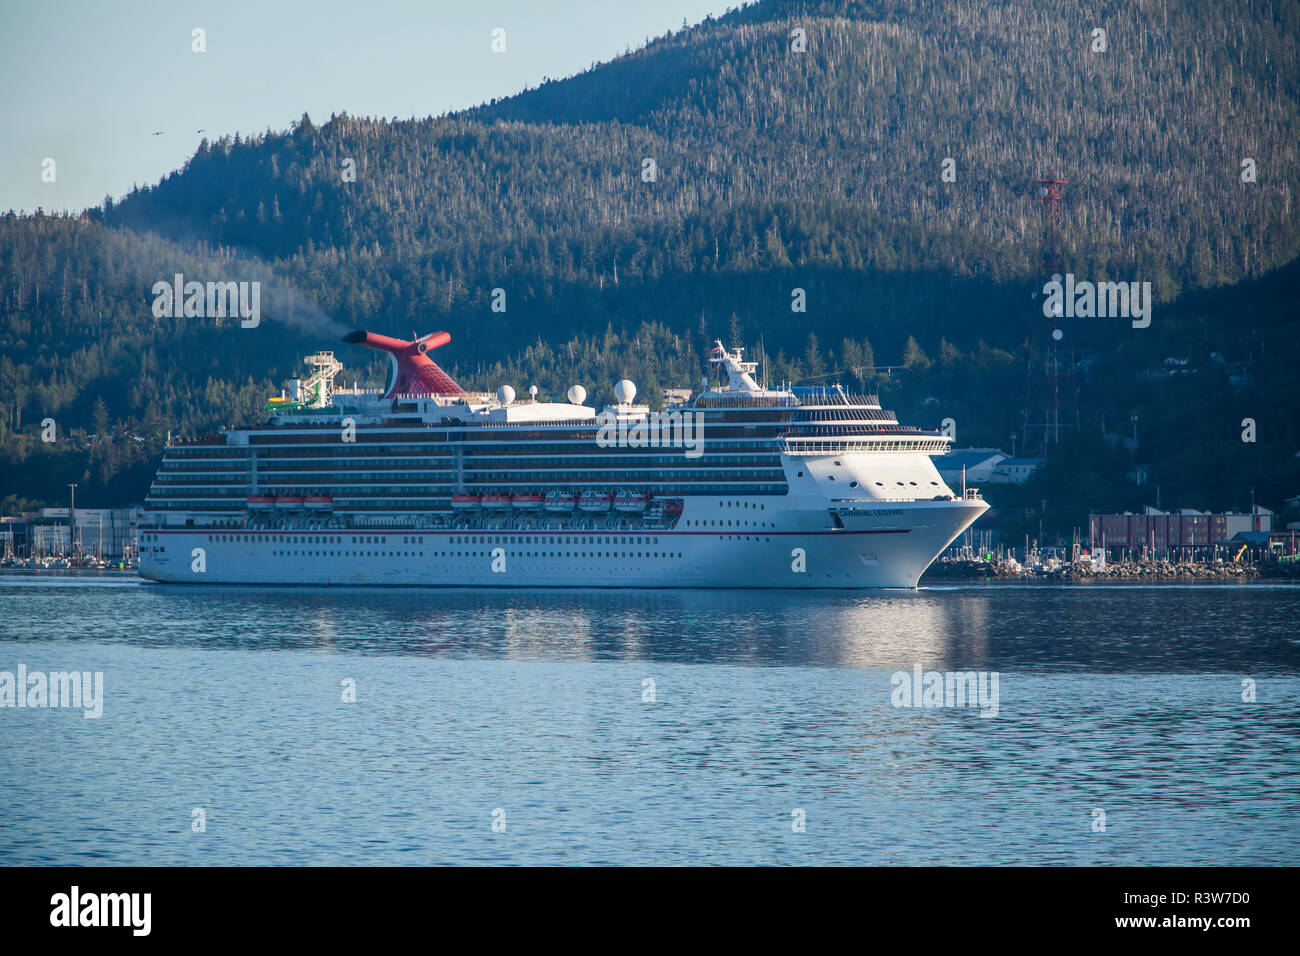 USA, Alaska, Ketchikan. Cruise ship at the dock Stock Photo